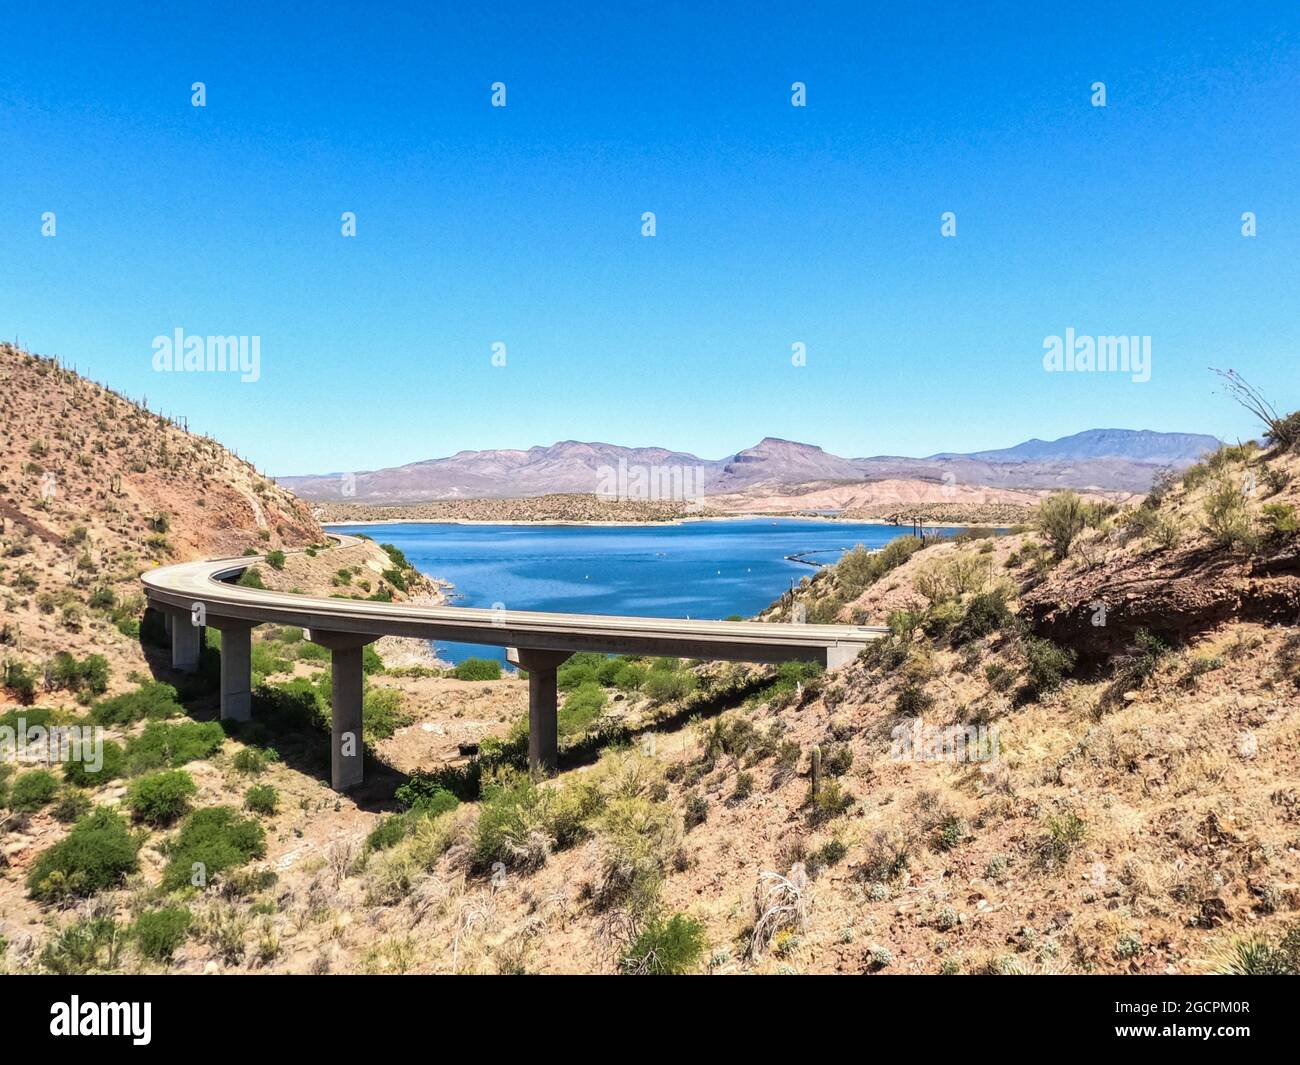 View of Roosevelt Lake Marina from the Arizona Trail, Roosevelt, Arizona, U.S.A Stock Photo